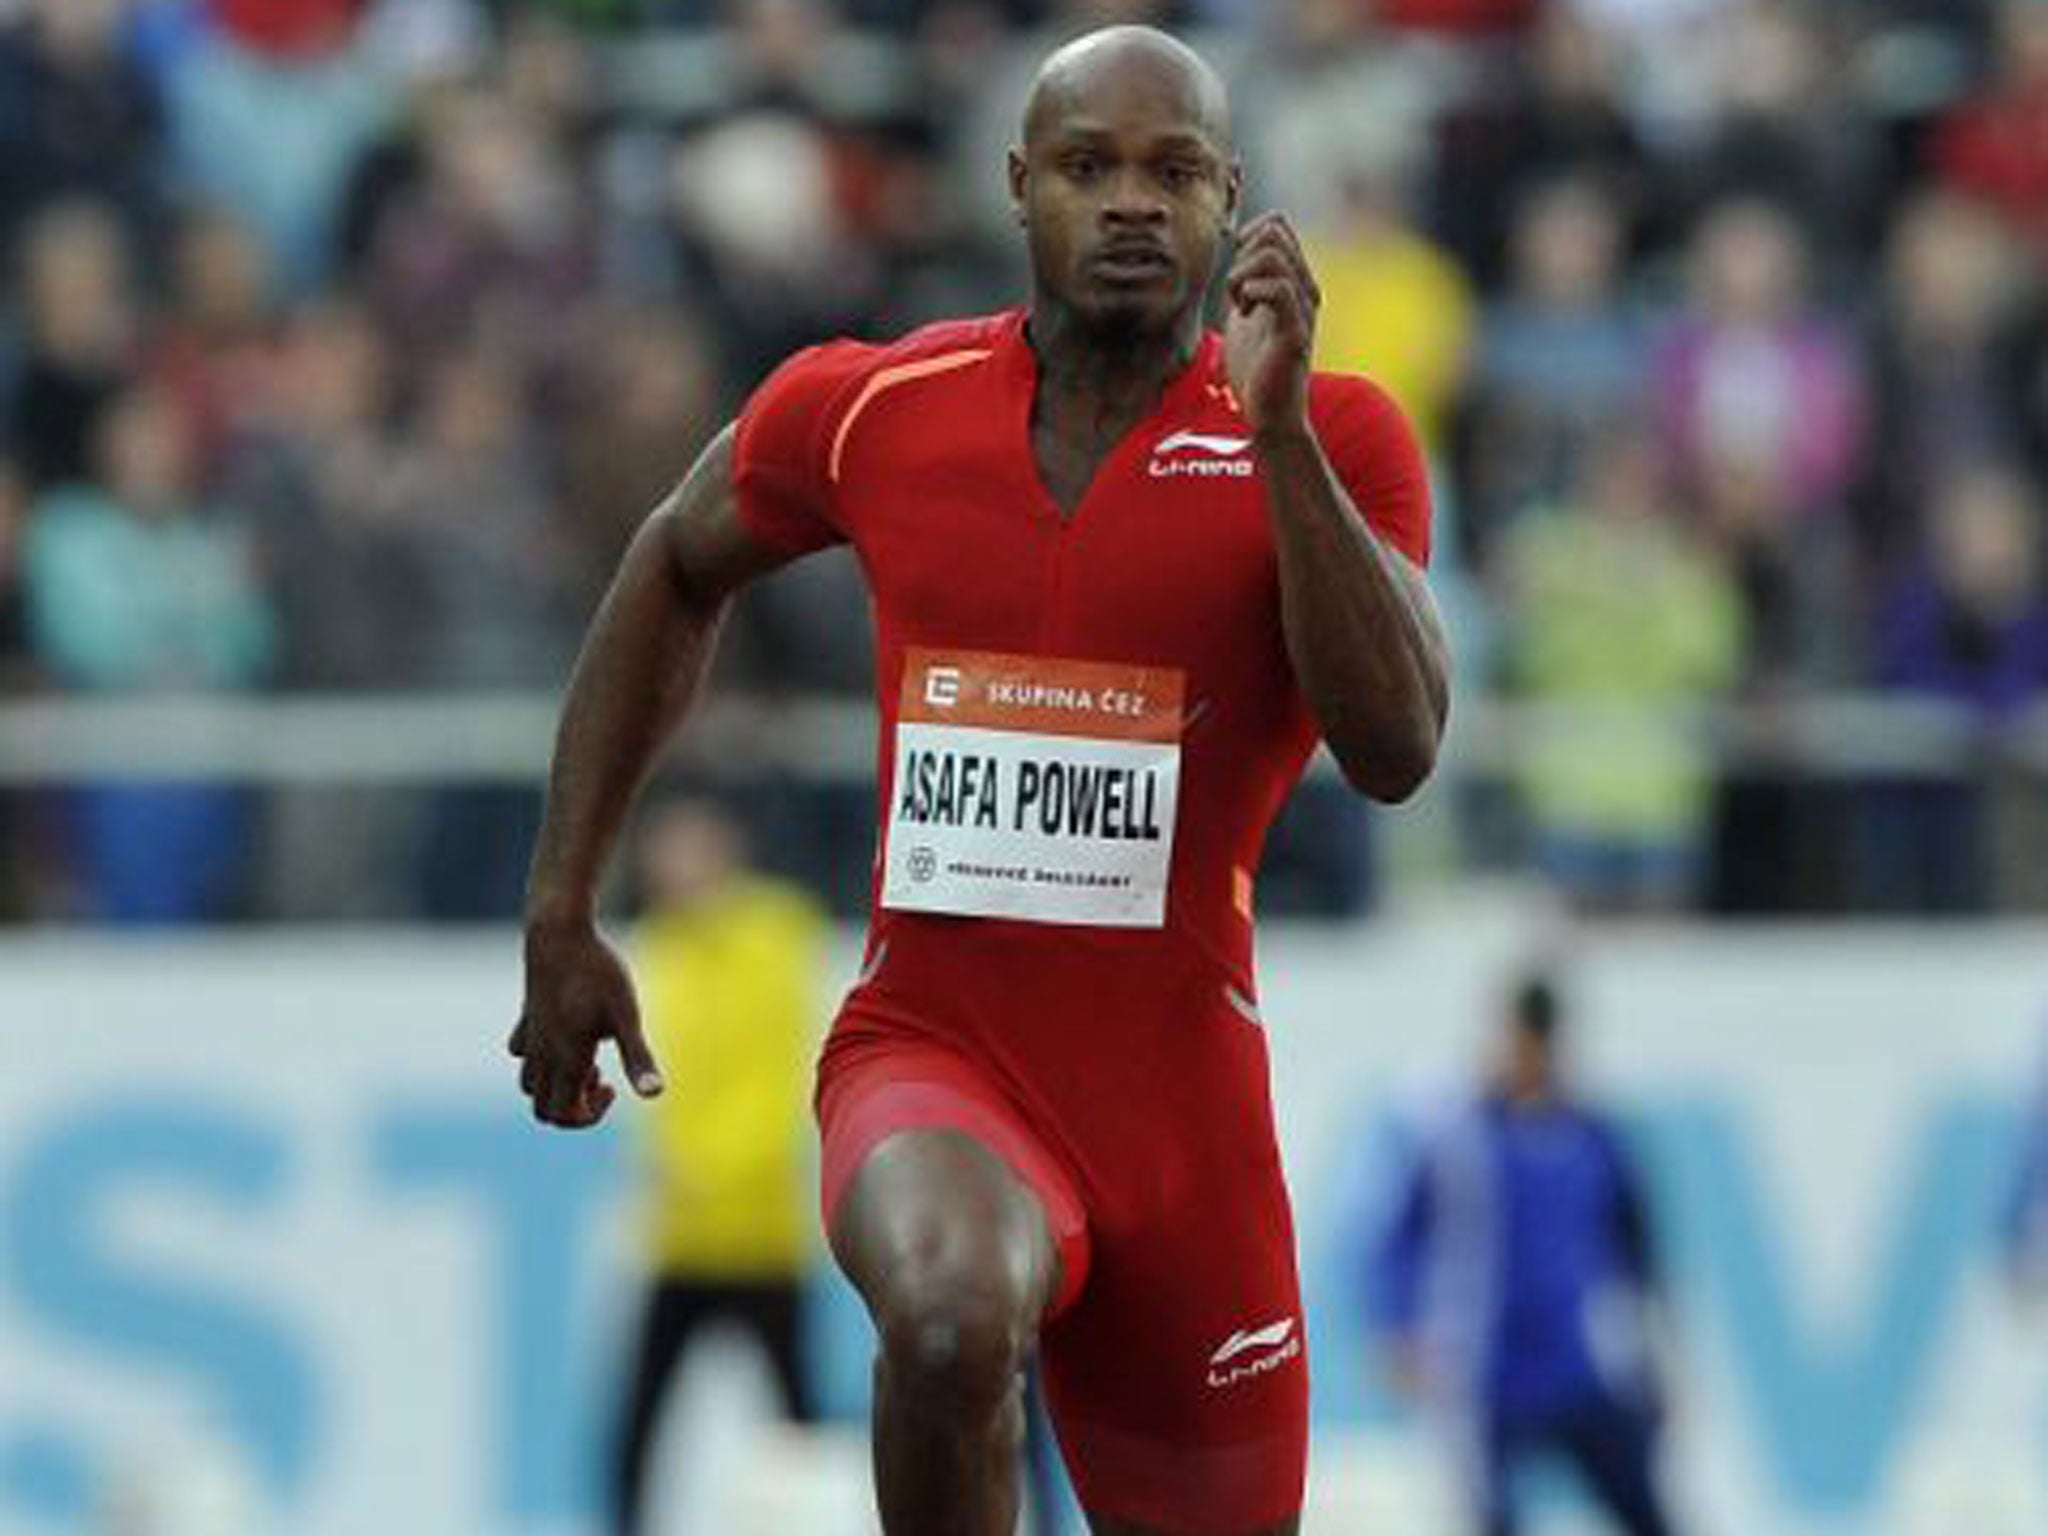 Asafa Powell has blamed his failed test on a supplement